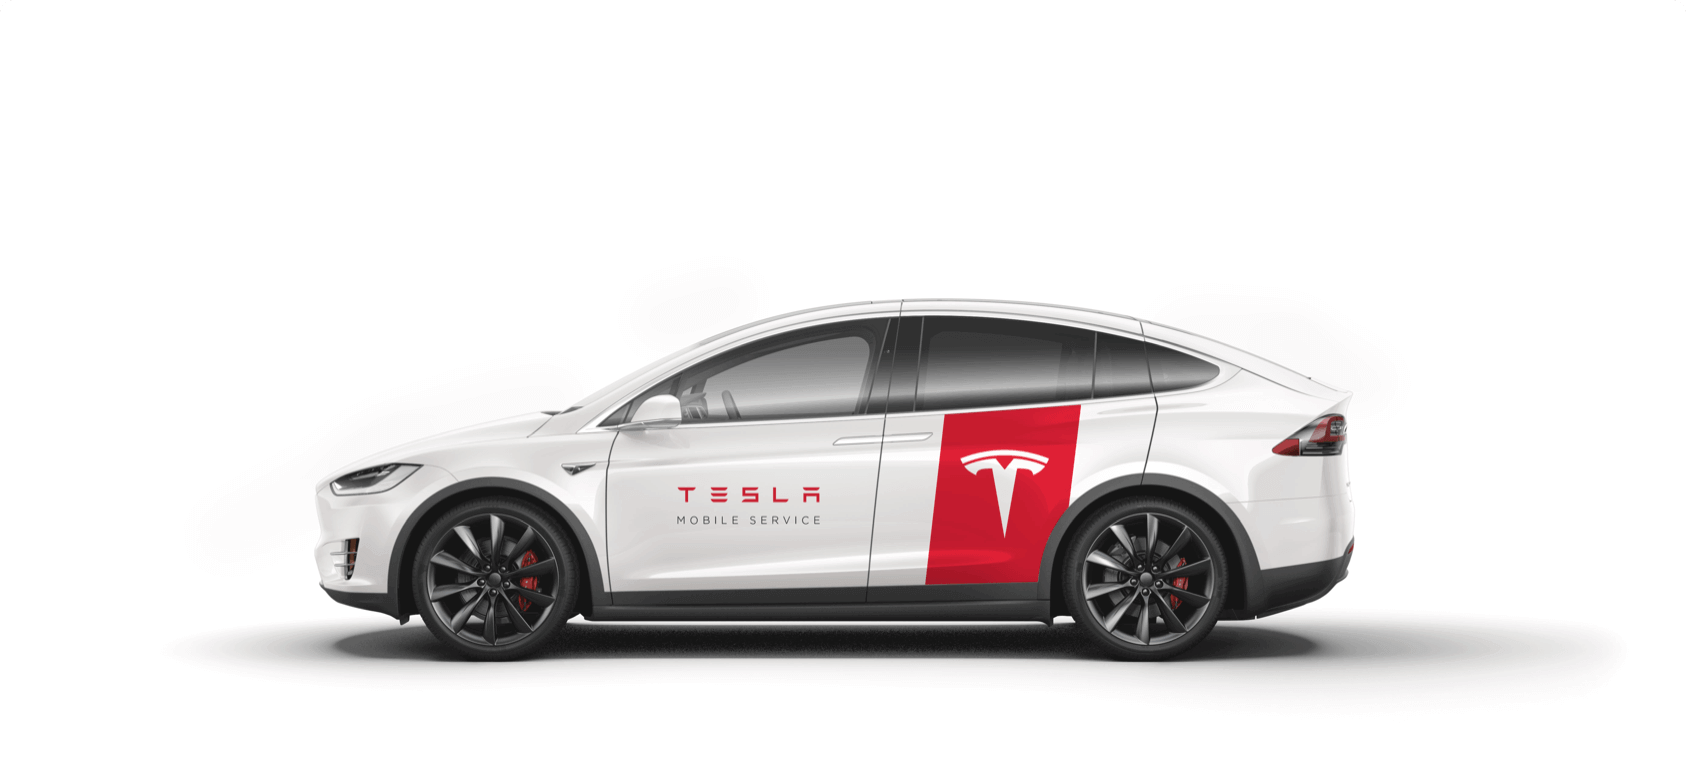 Tesla - Tesla بیشترین افت یک روزه ی سهام خود را تجربه کرد